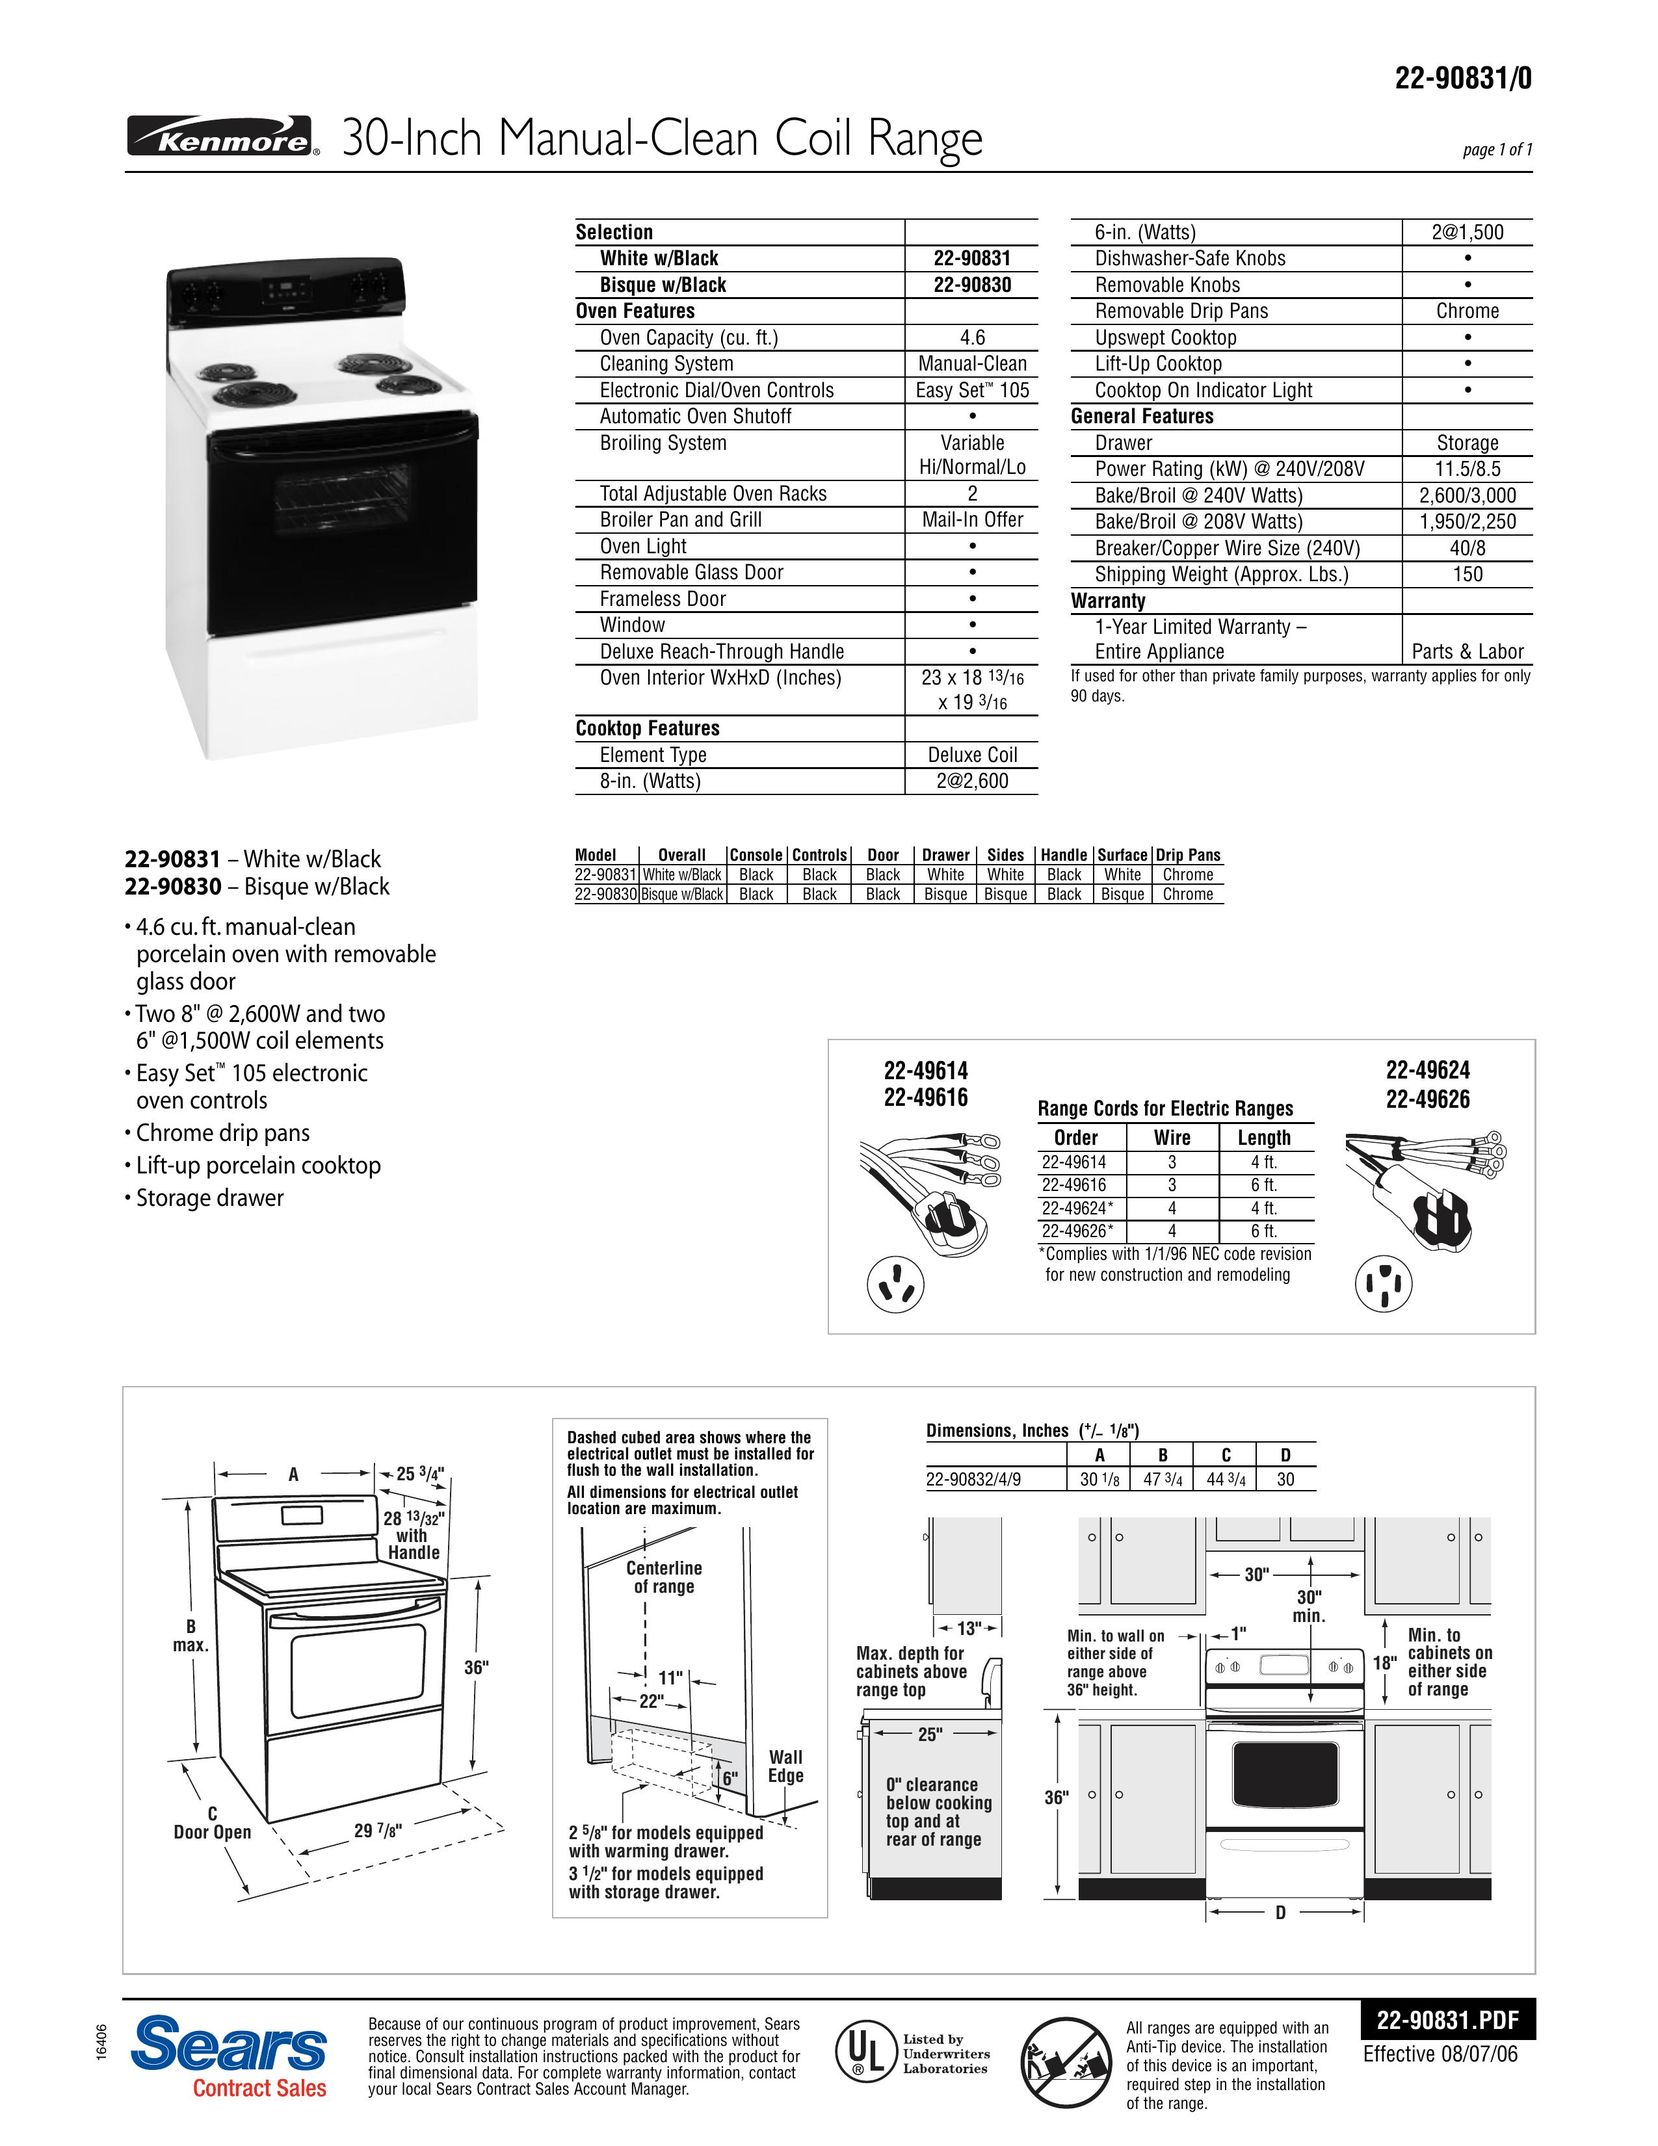 Kenmore 22-90830 Range User Manual